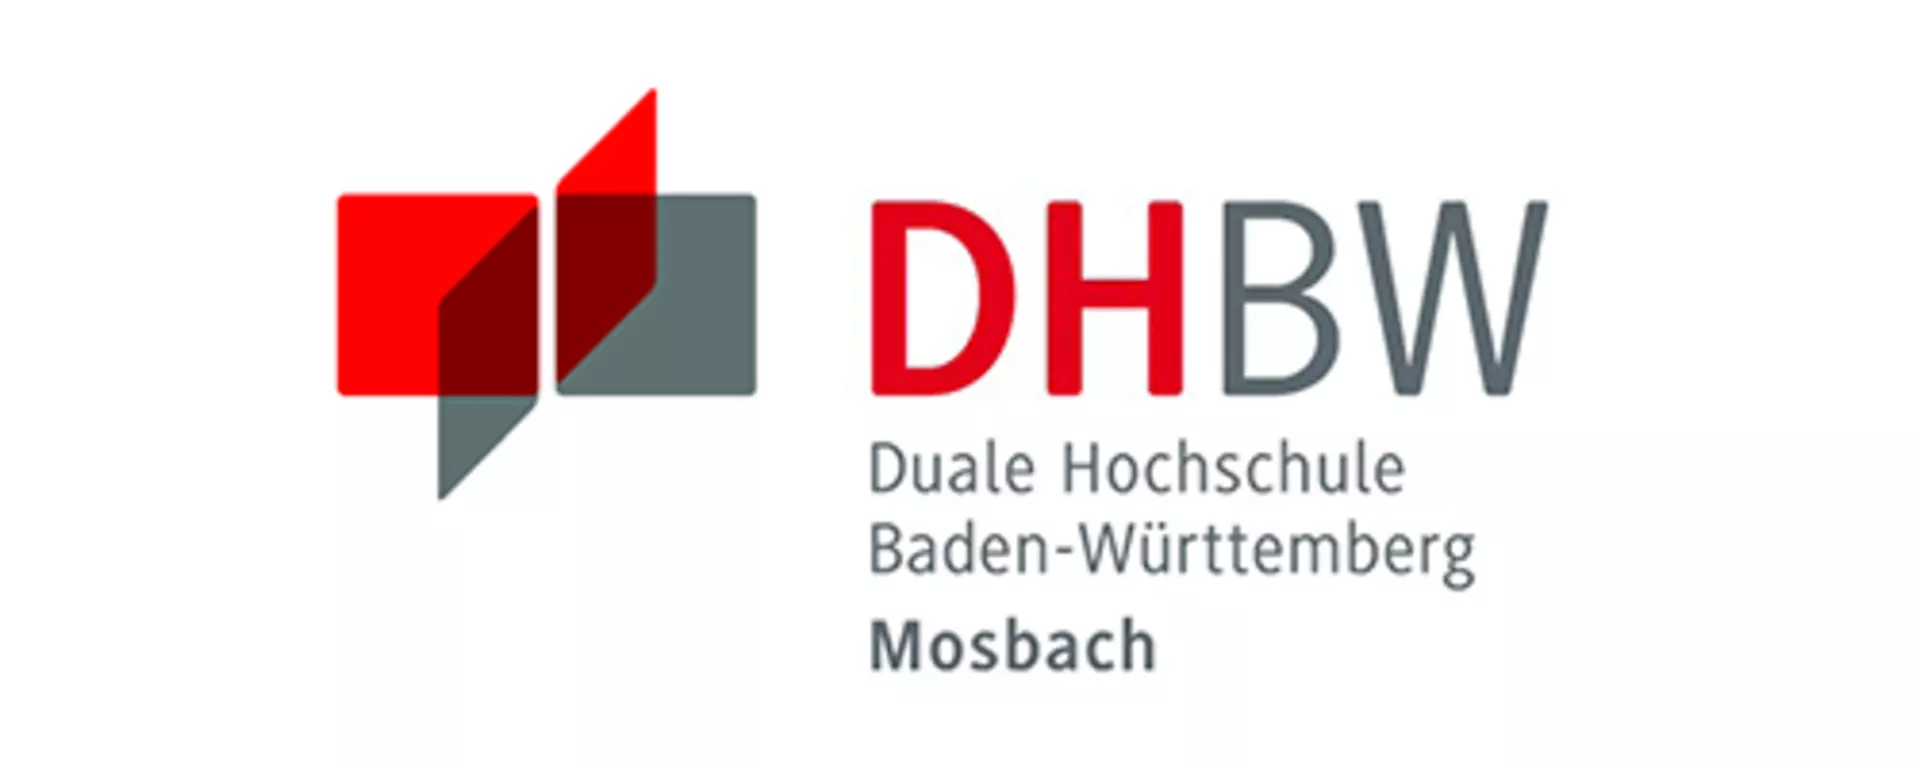 LOGO der DHBW - Duale Hochschule Baden-Württemberg